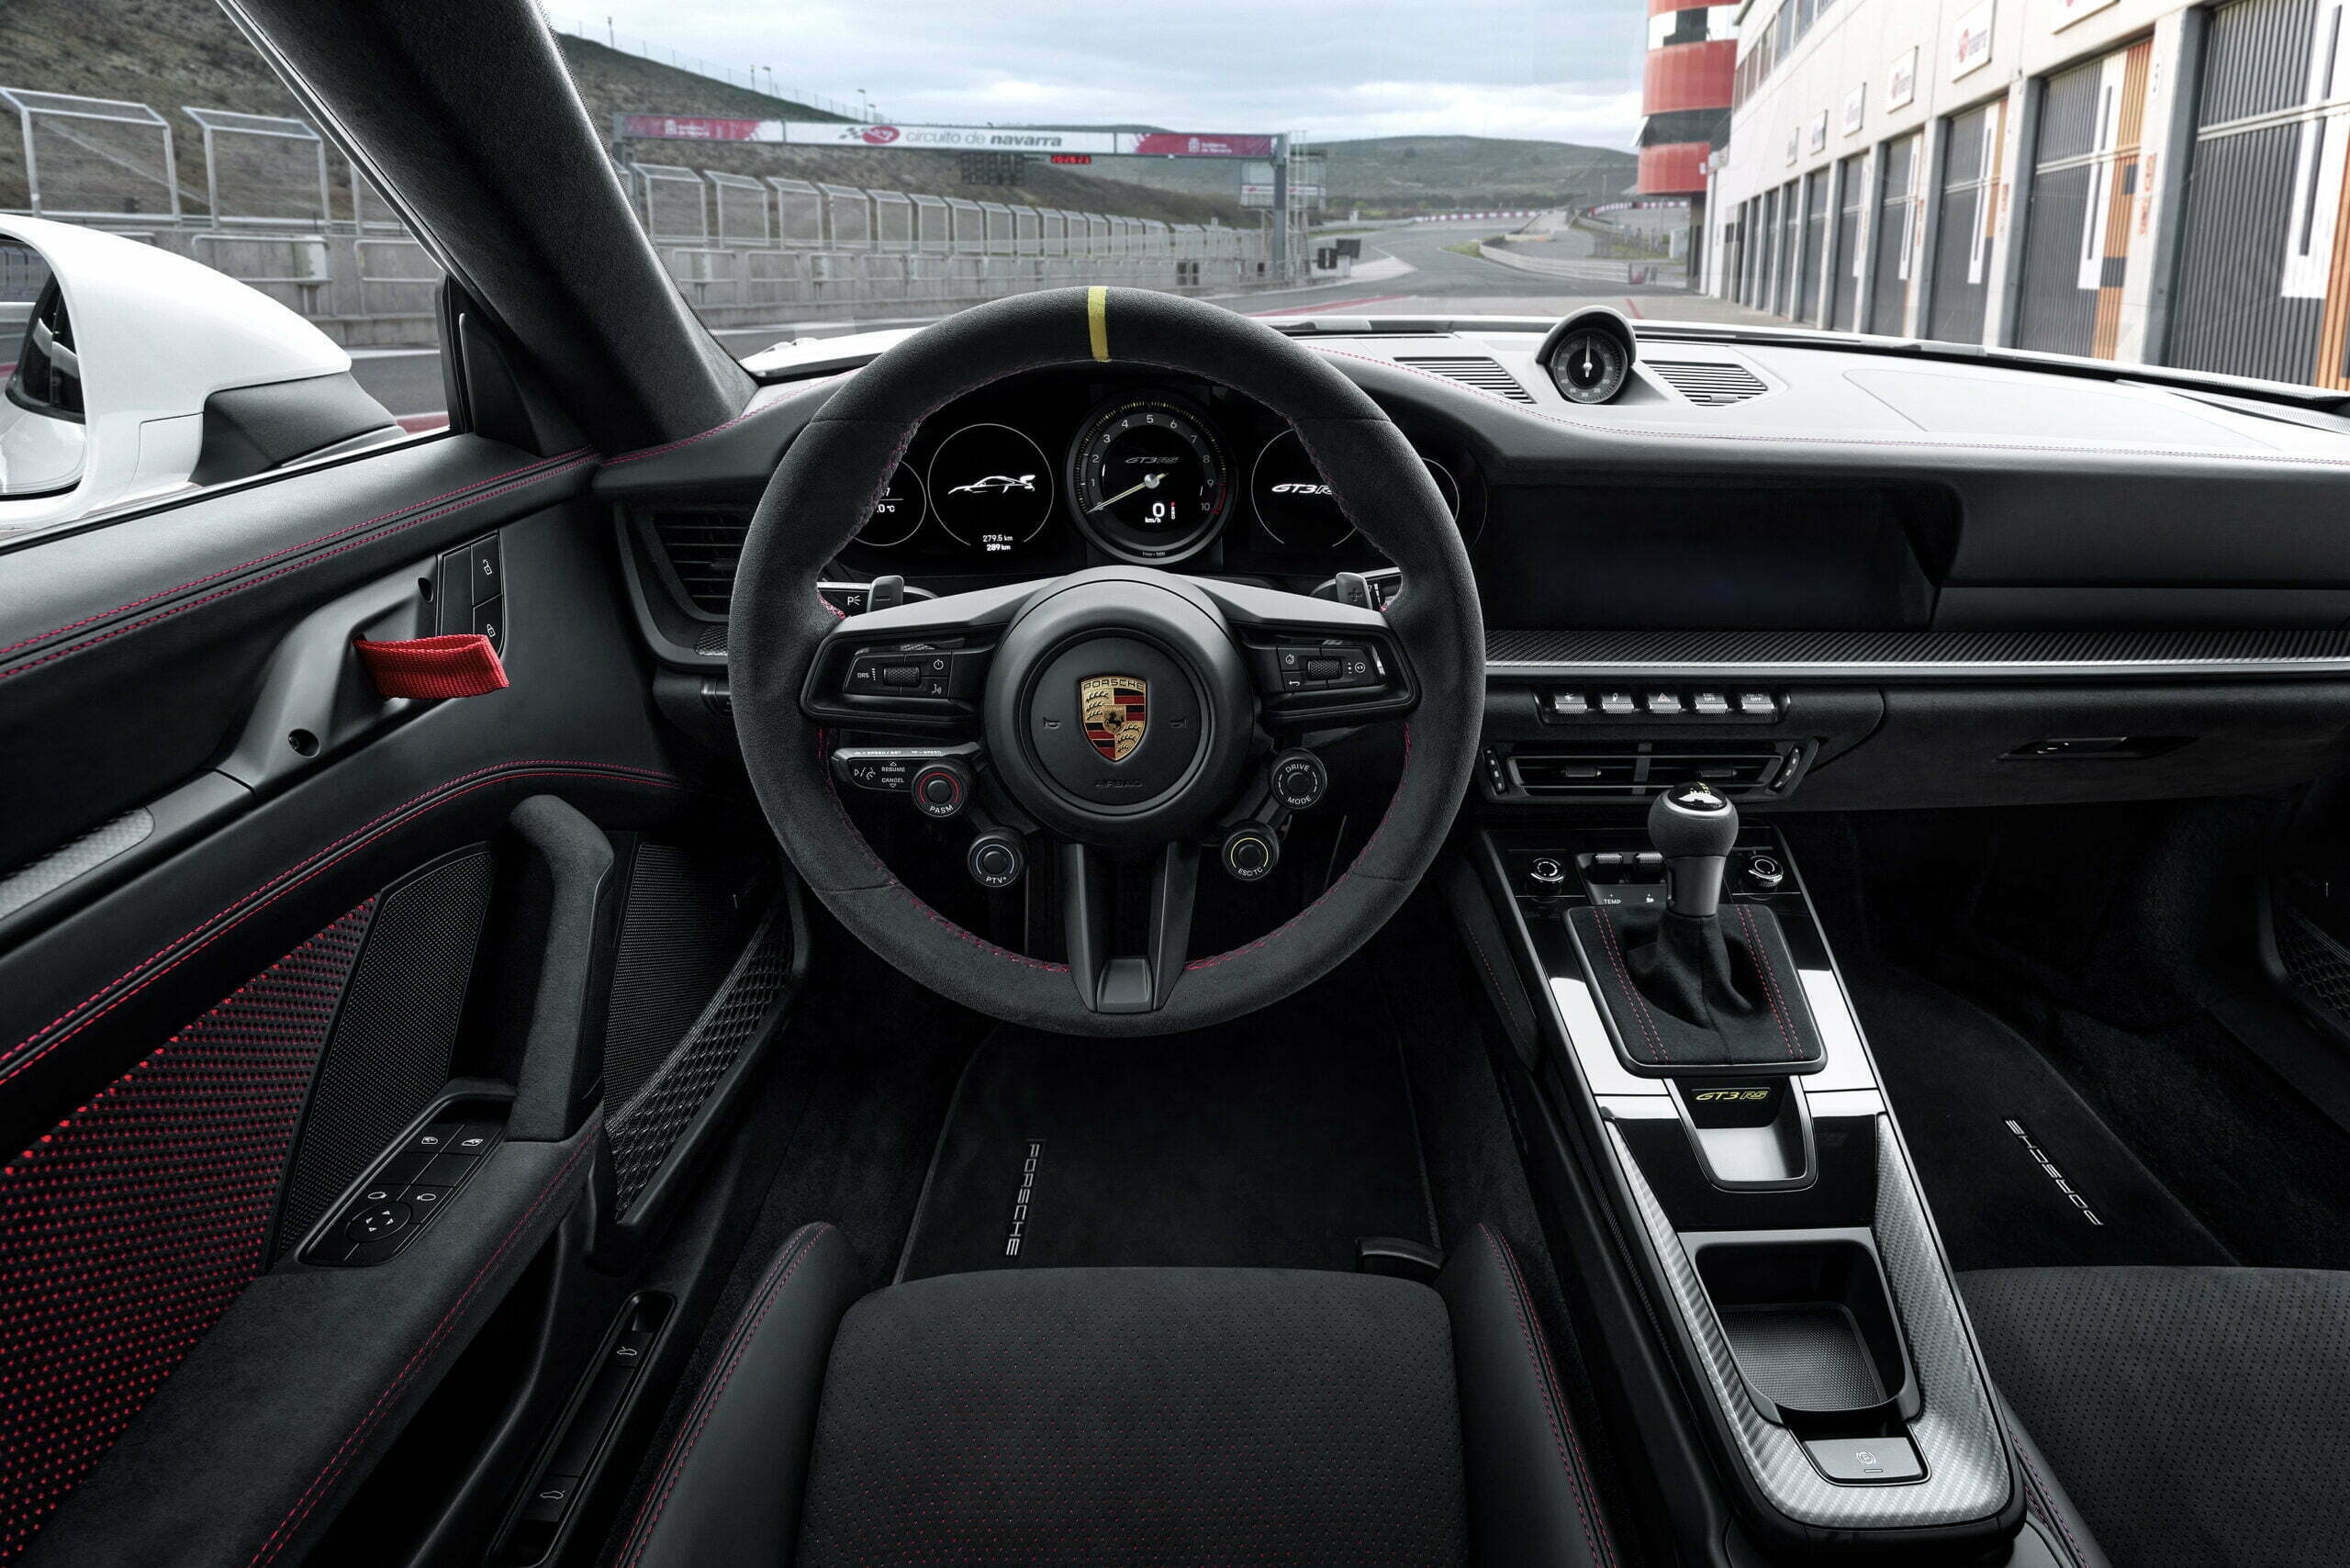 New 2022 Porsche 911 GT3 RS Revealed (3)